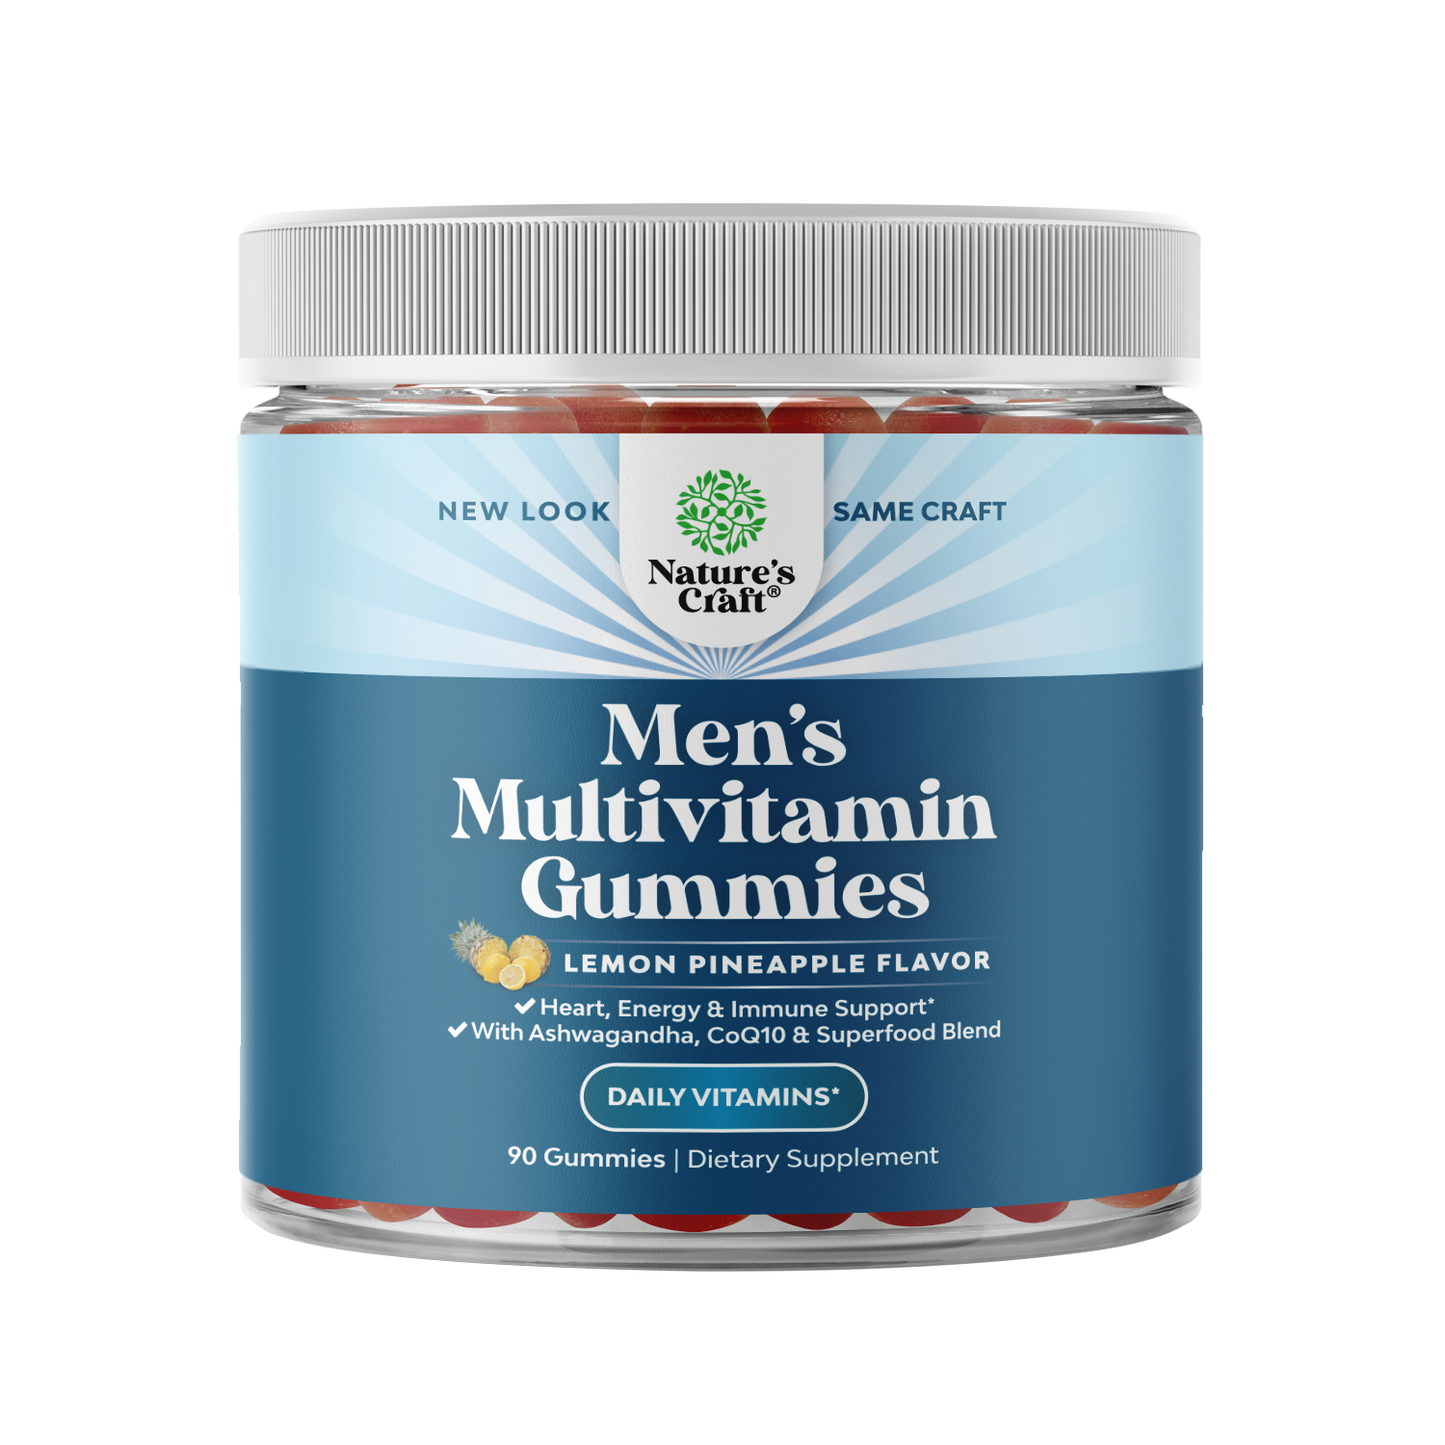 Mens Multivitamin Gummies - 90 Gummies 2pack - Nature's Craft